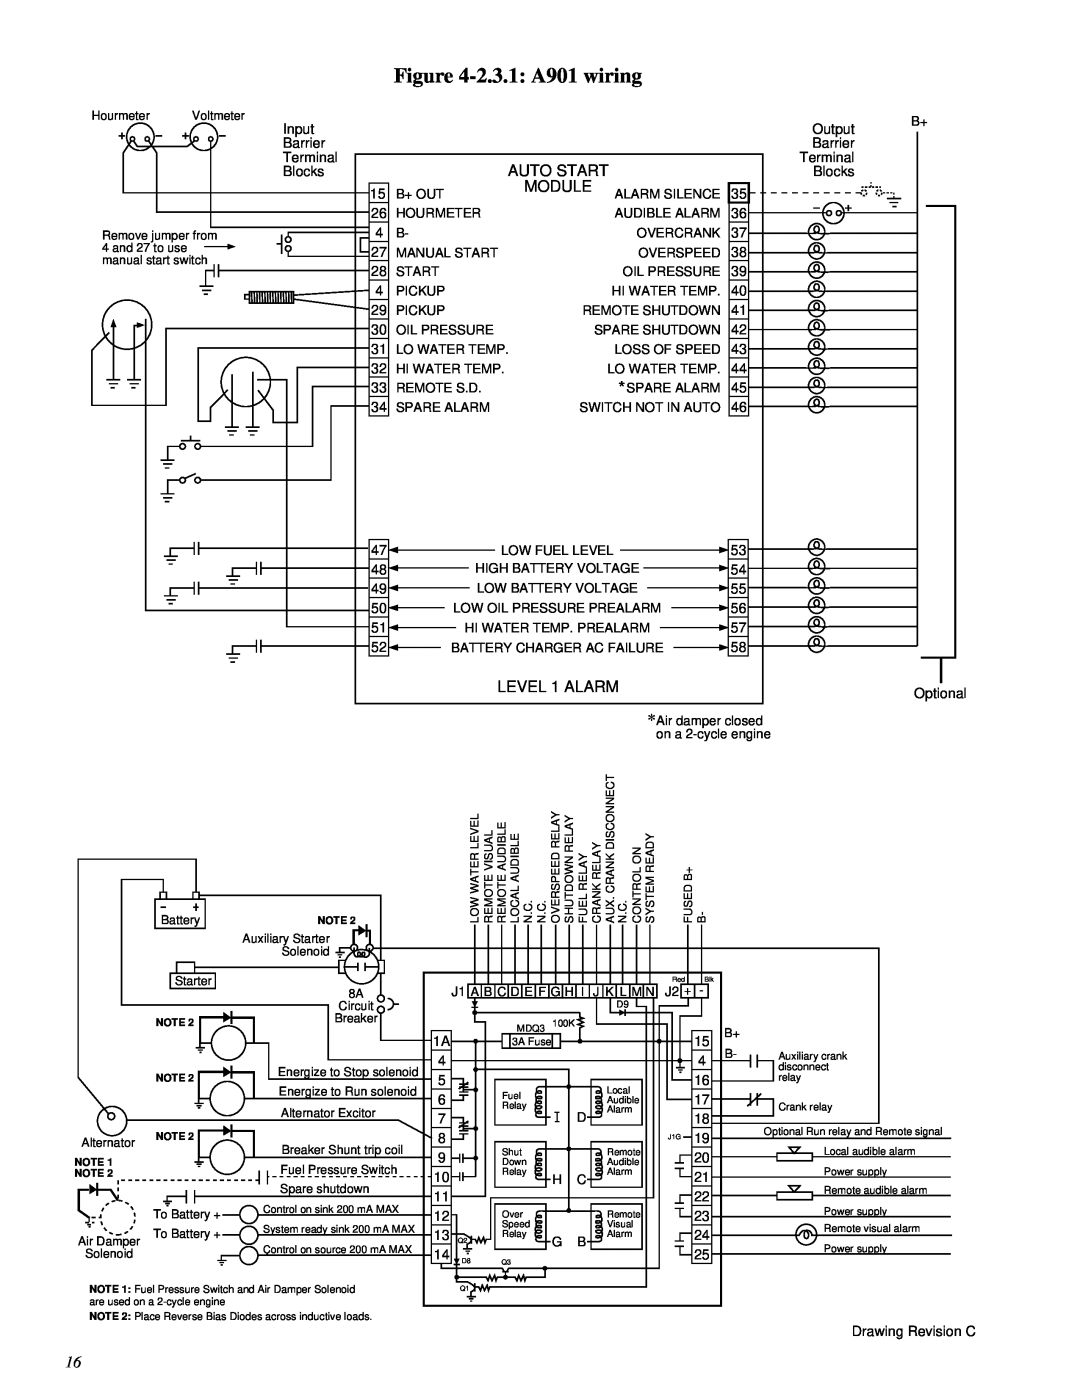 Murphy A900 Series manual 2.3.1 A901 wiring, Auto Start, Module, LEVEL 1 ALARM 